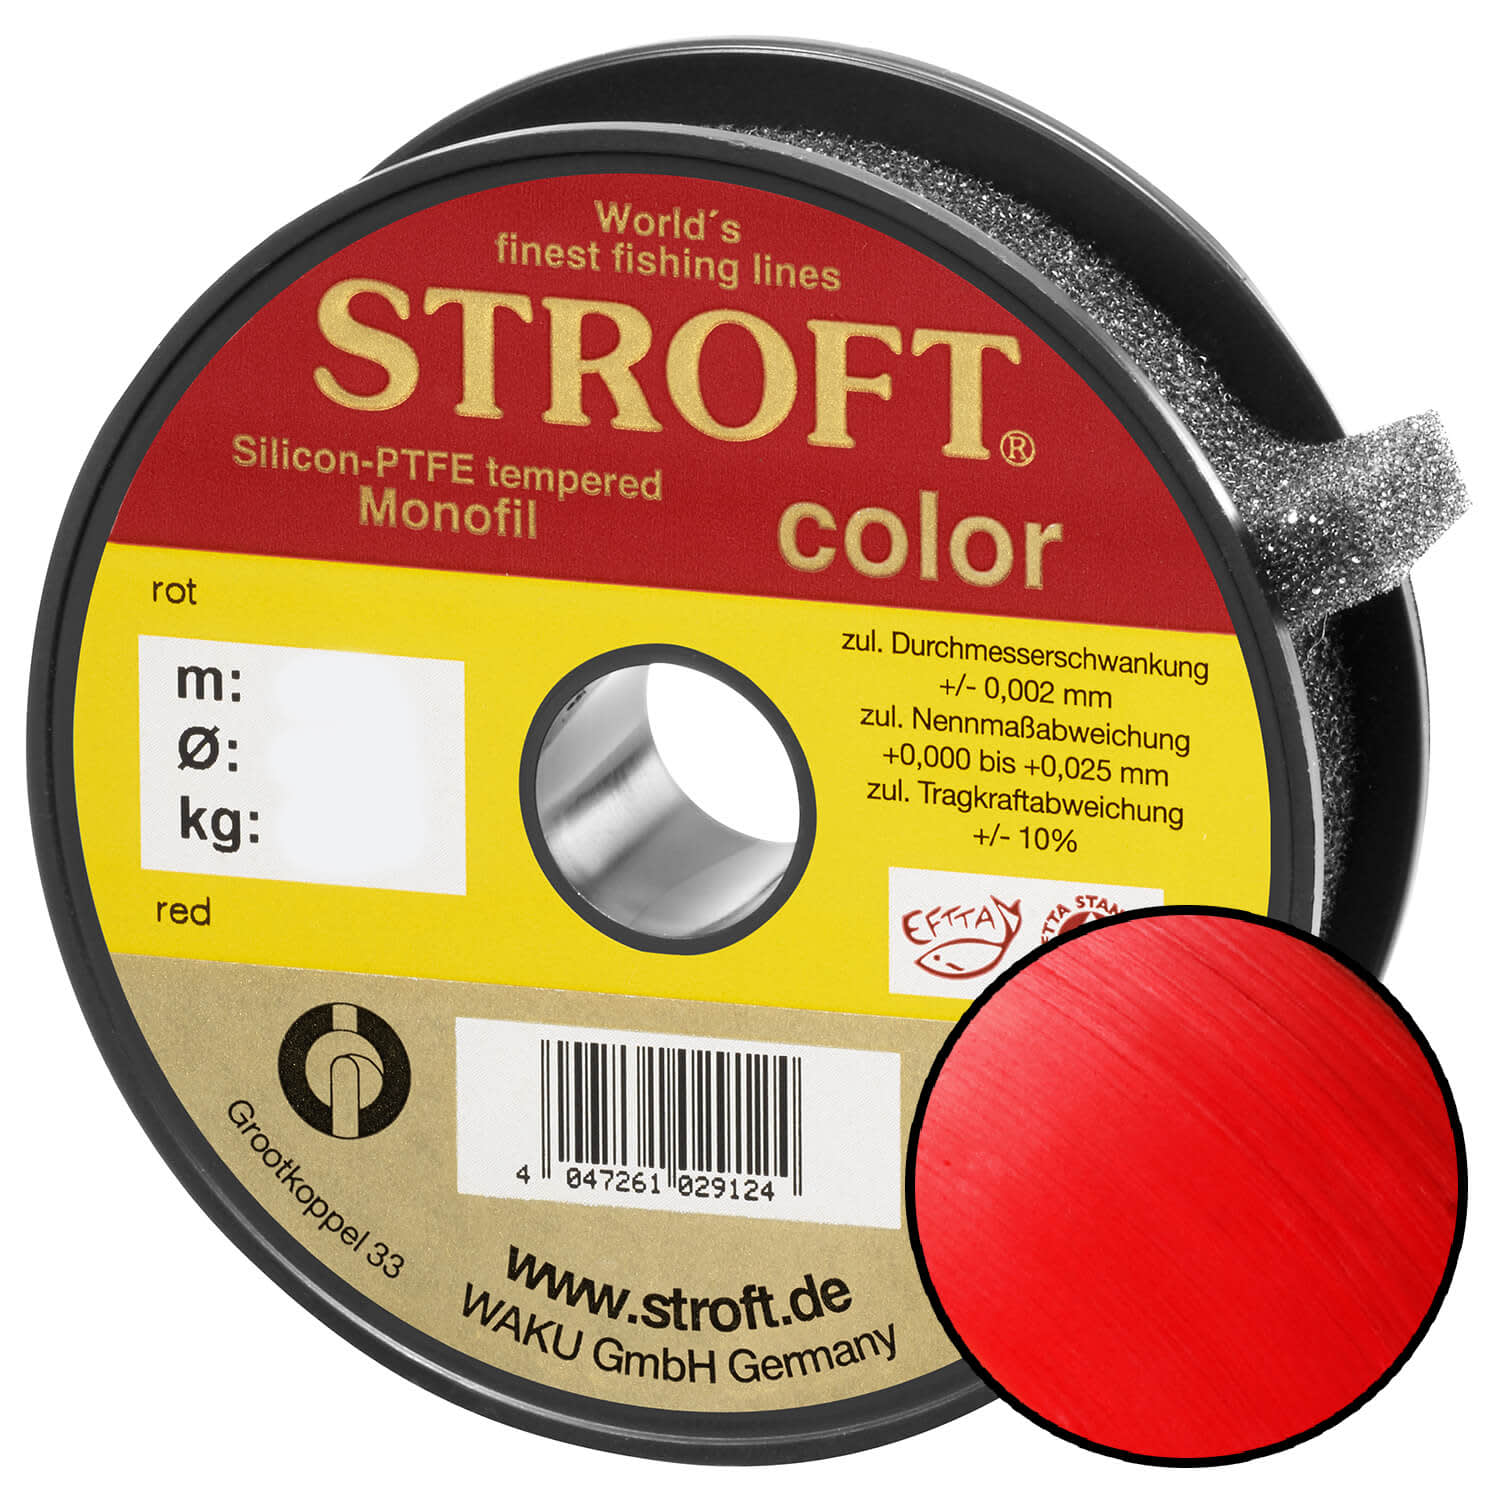 STROFT Color Monofilament Fishing Line Red 0,20mm 3,9kg | 1000m